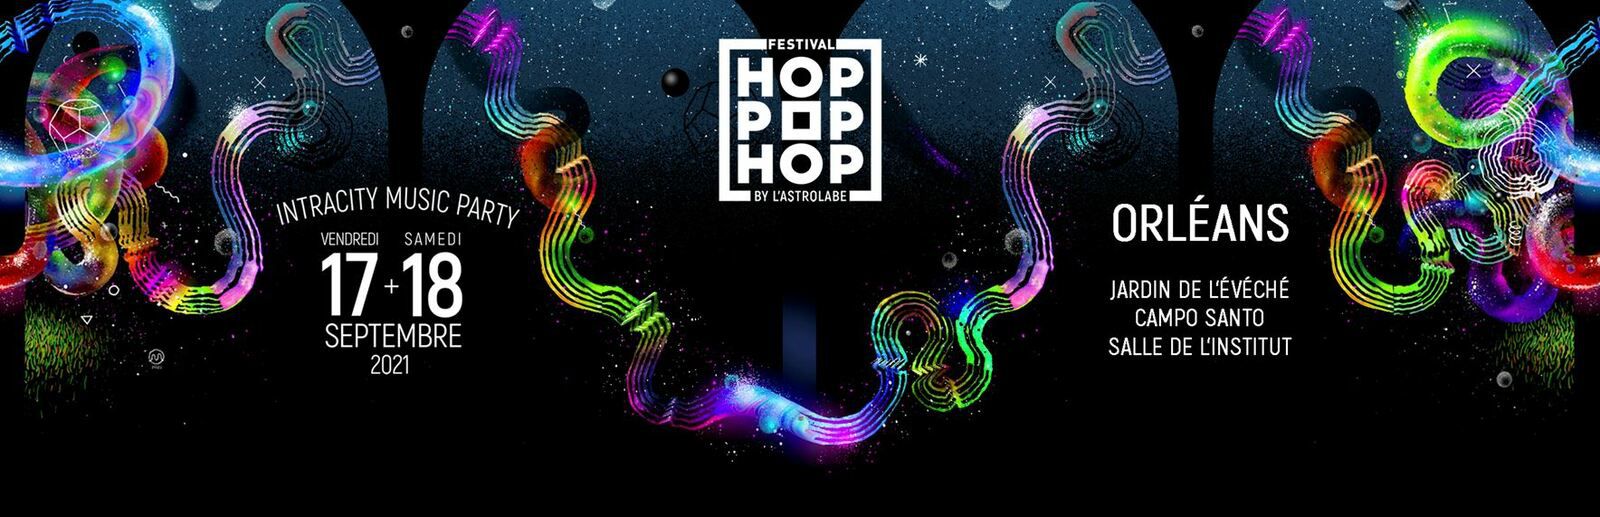 festival hop hop hop